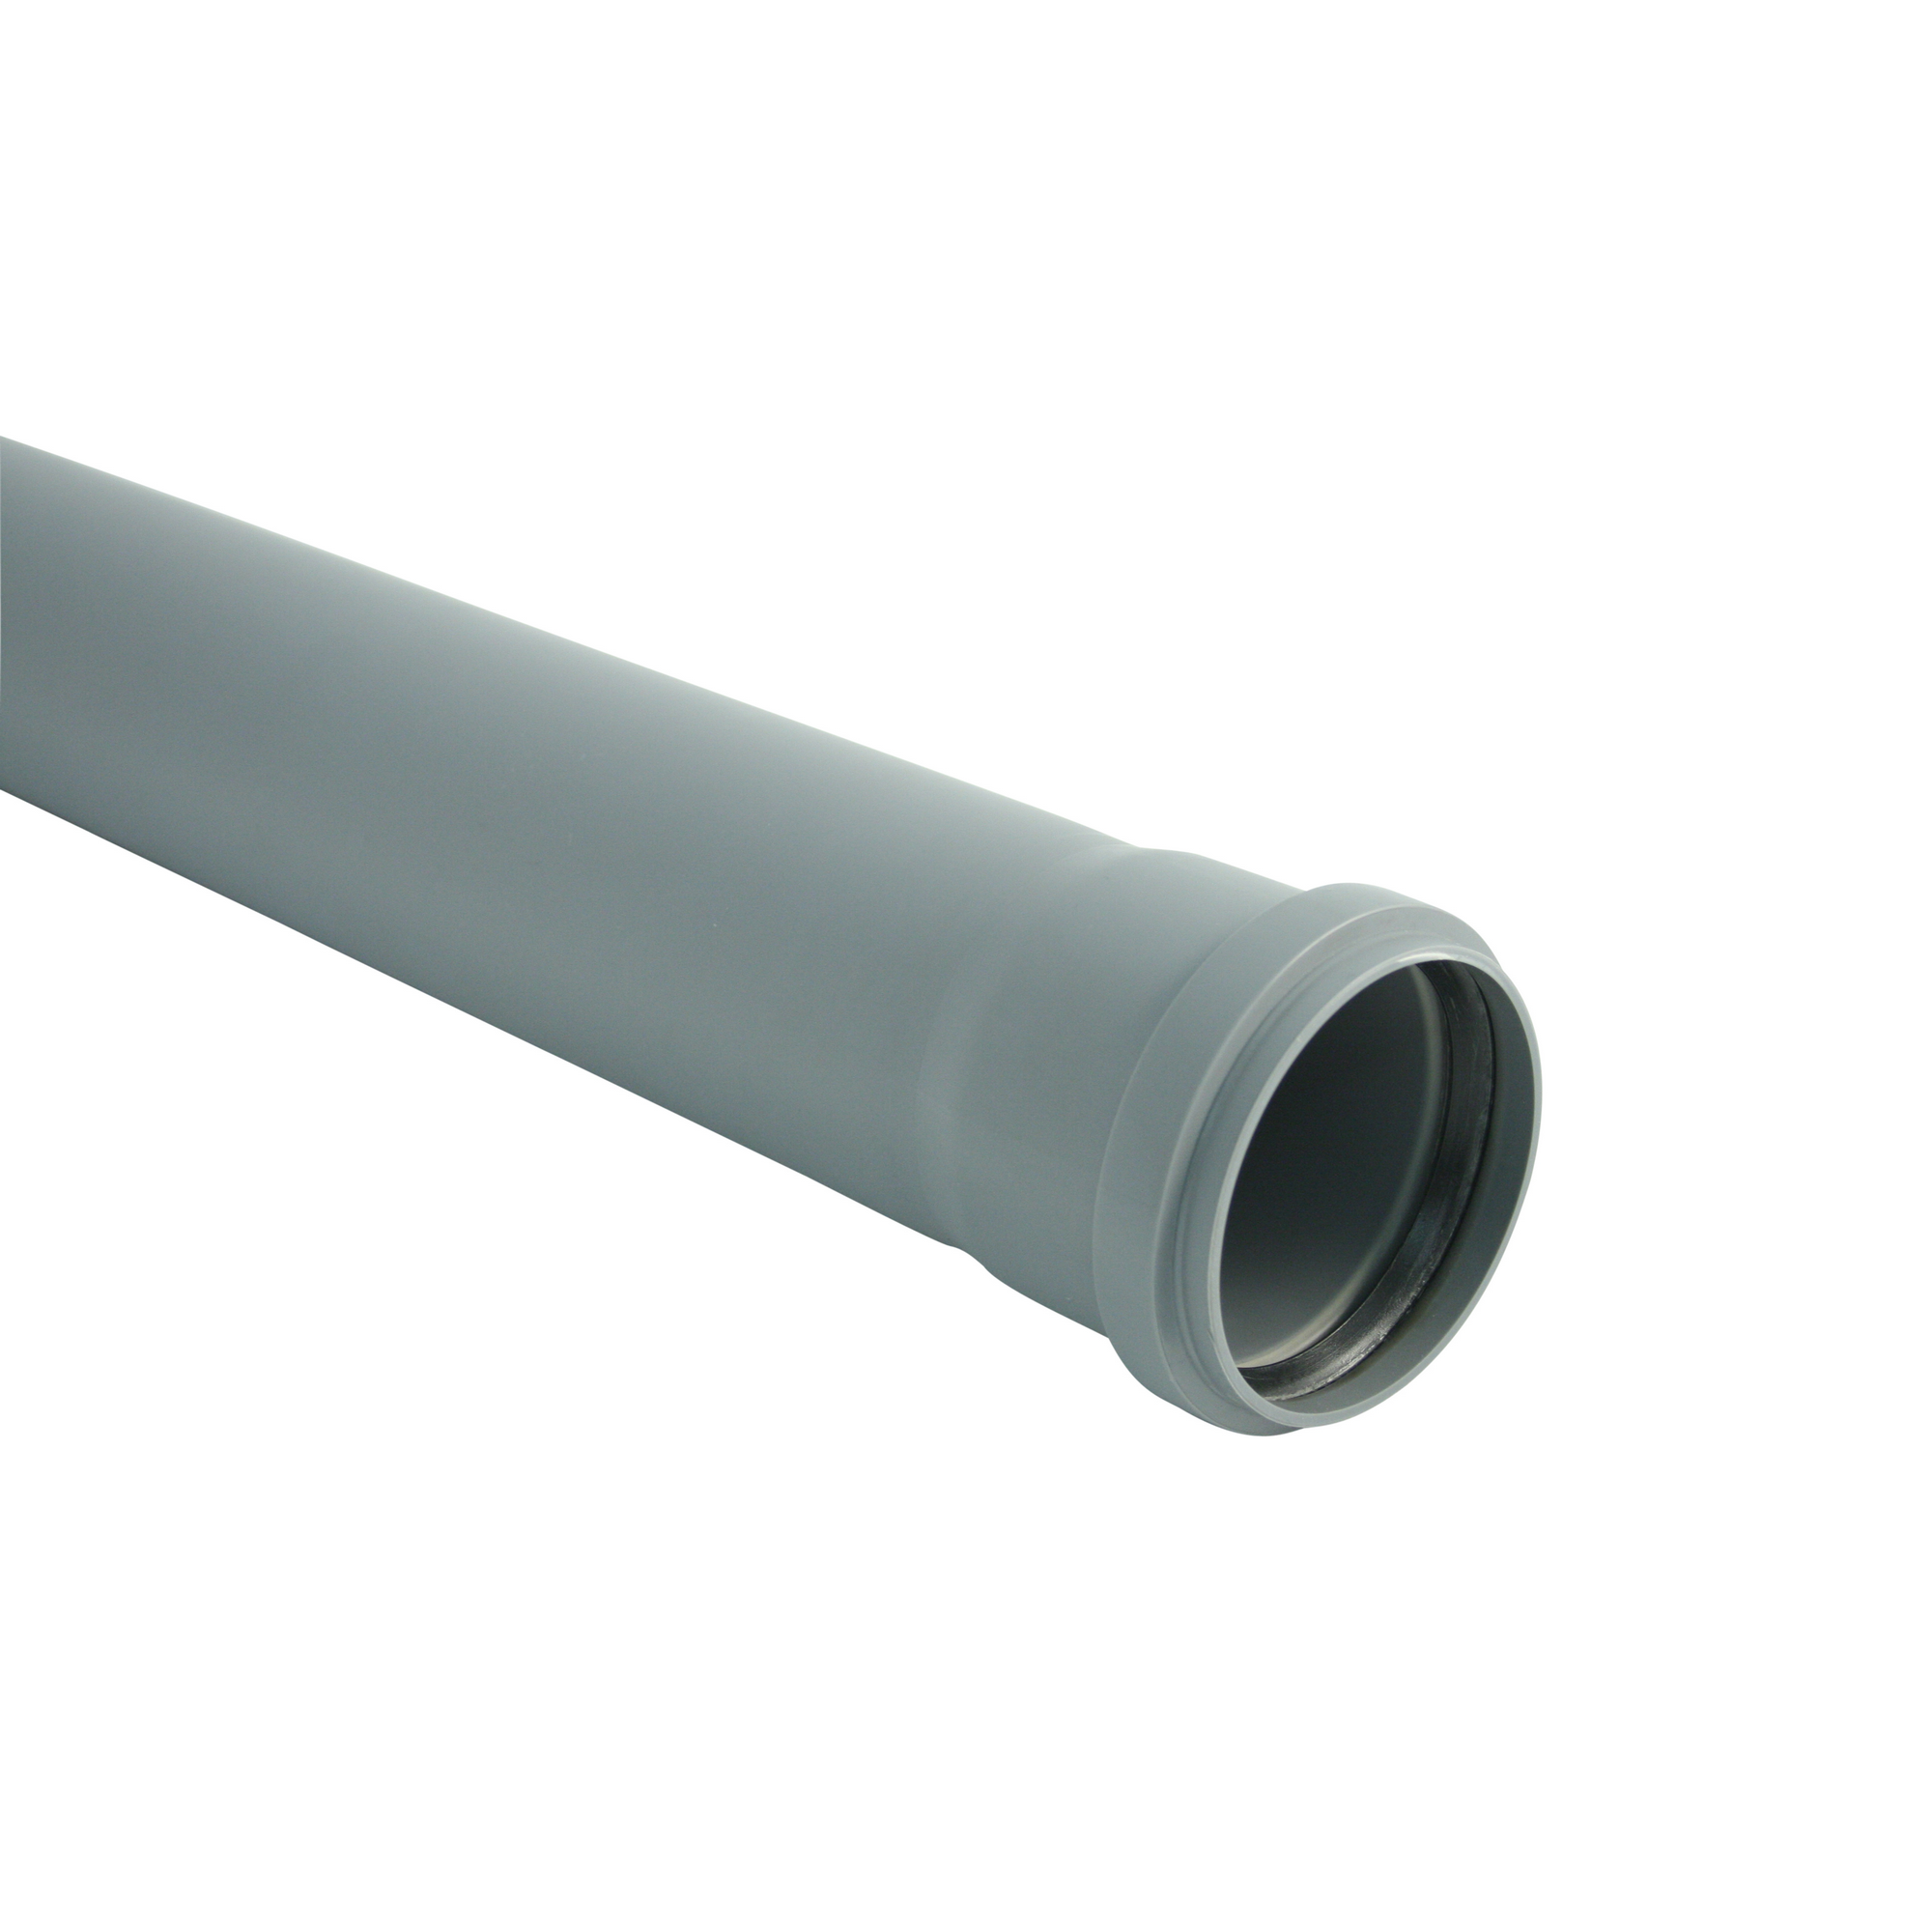 HTEM-Rohr mit Steckmuffe grau DN 90, 575 mm + product picture